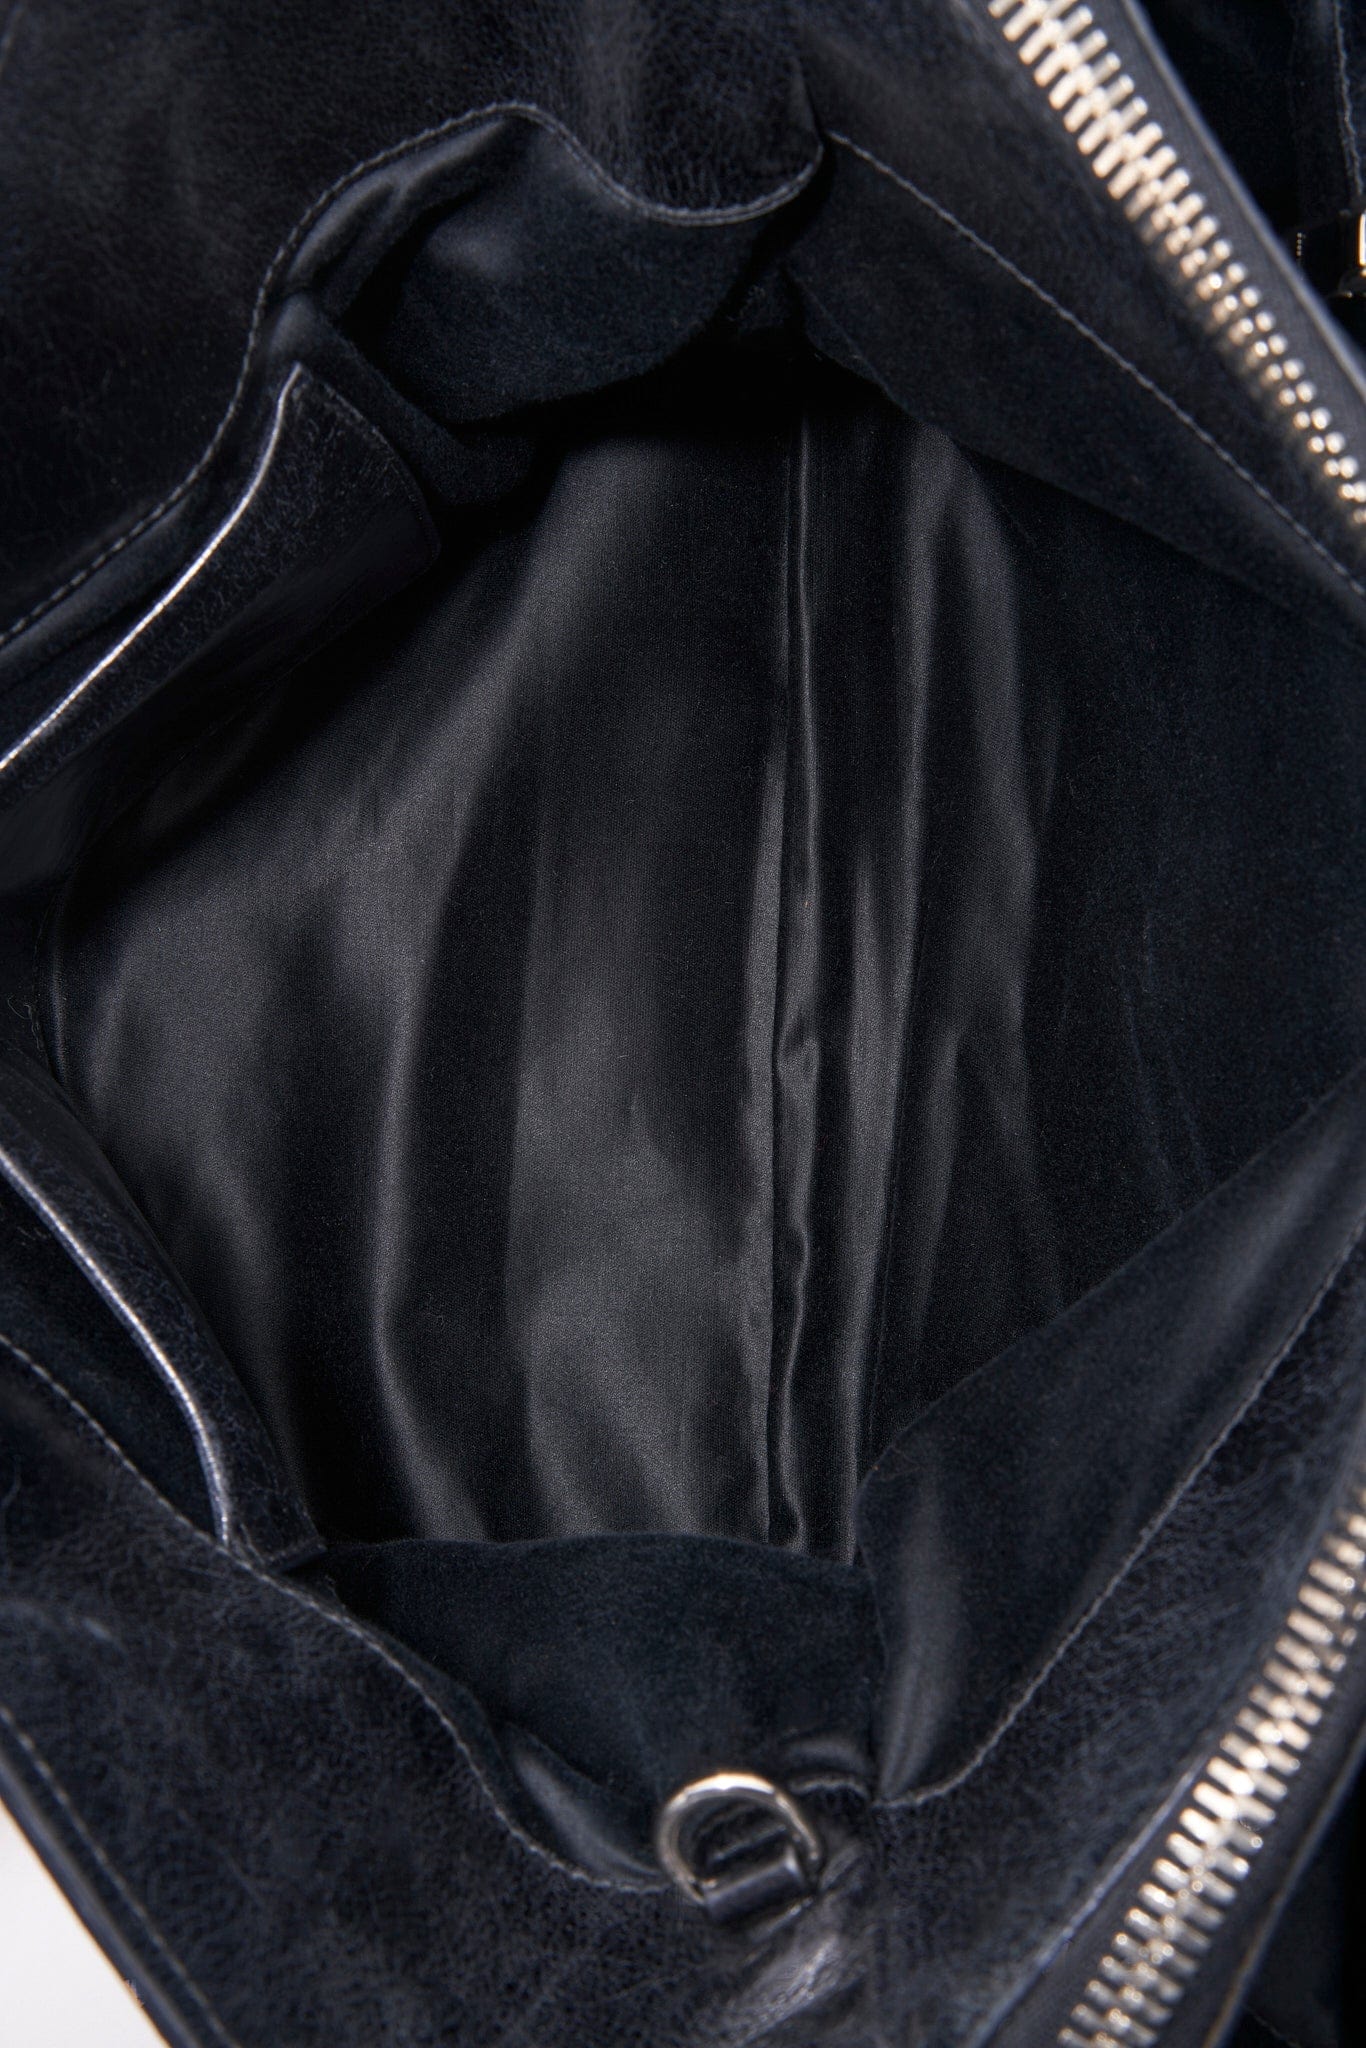 Miu Miu Black Leather Tote Bag